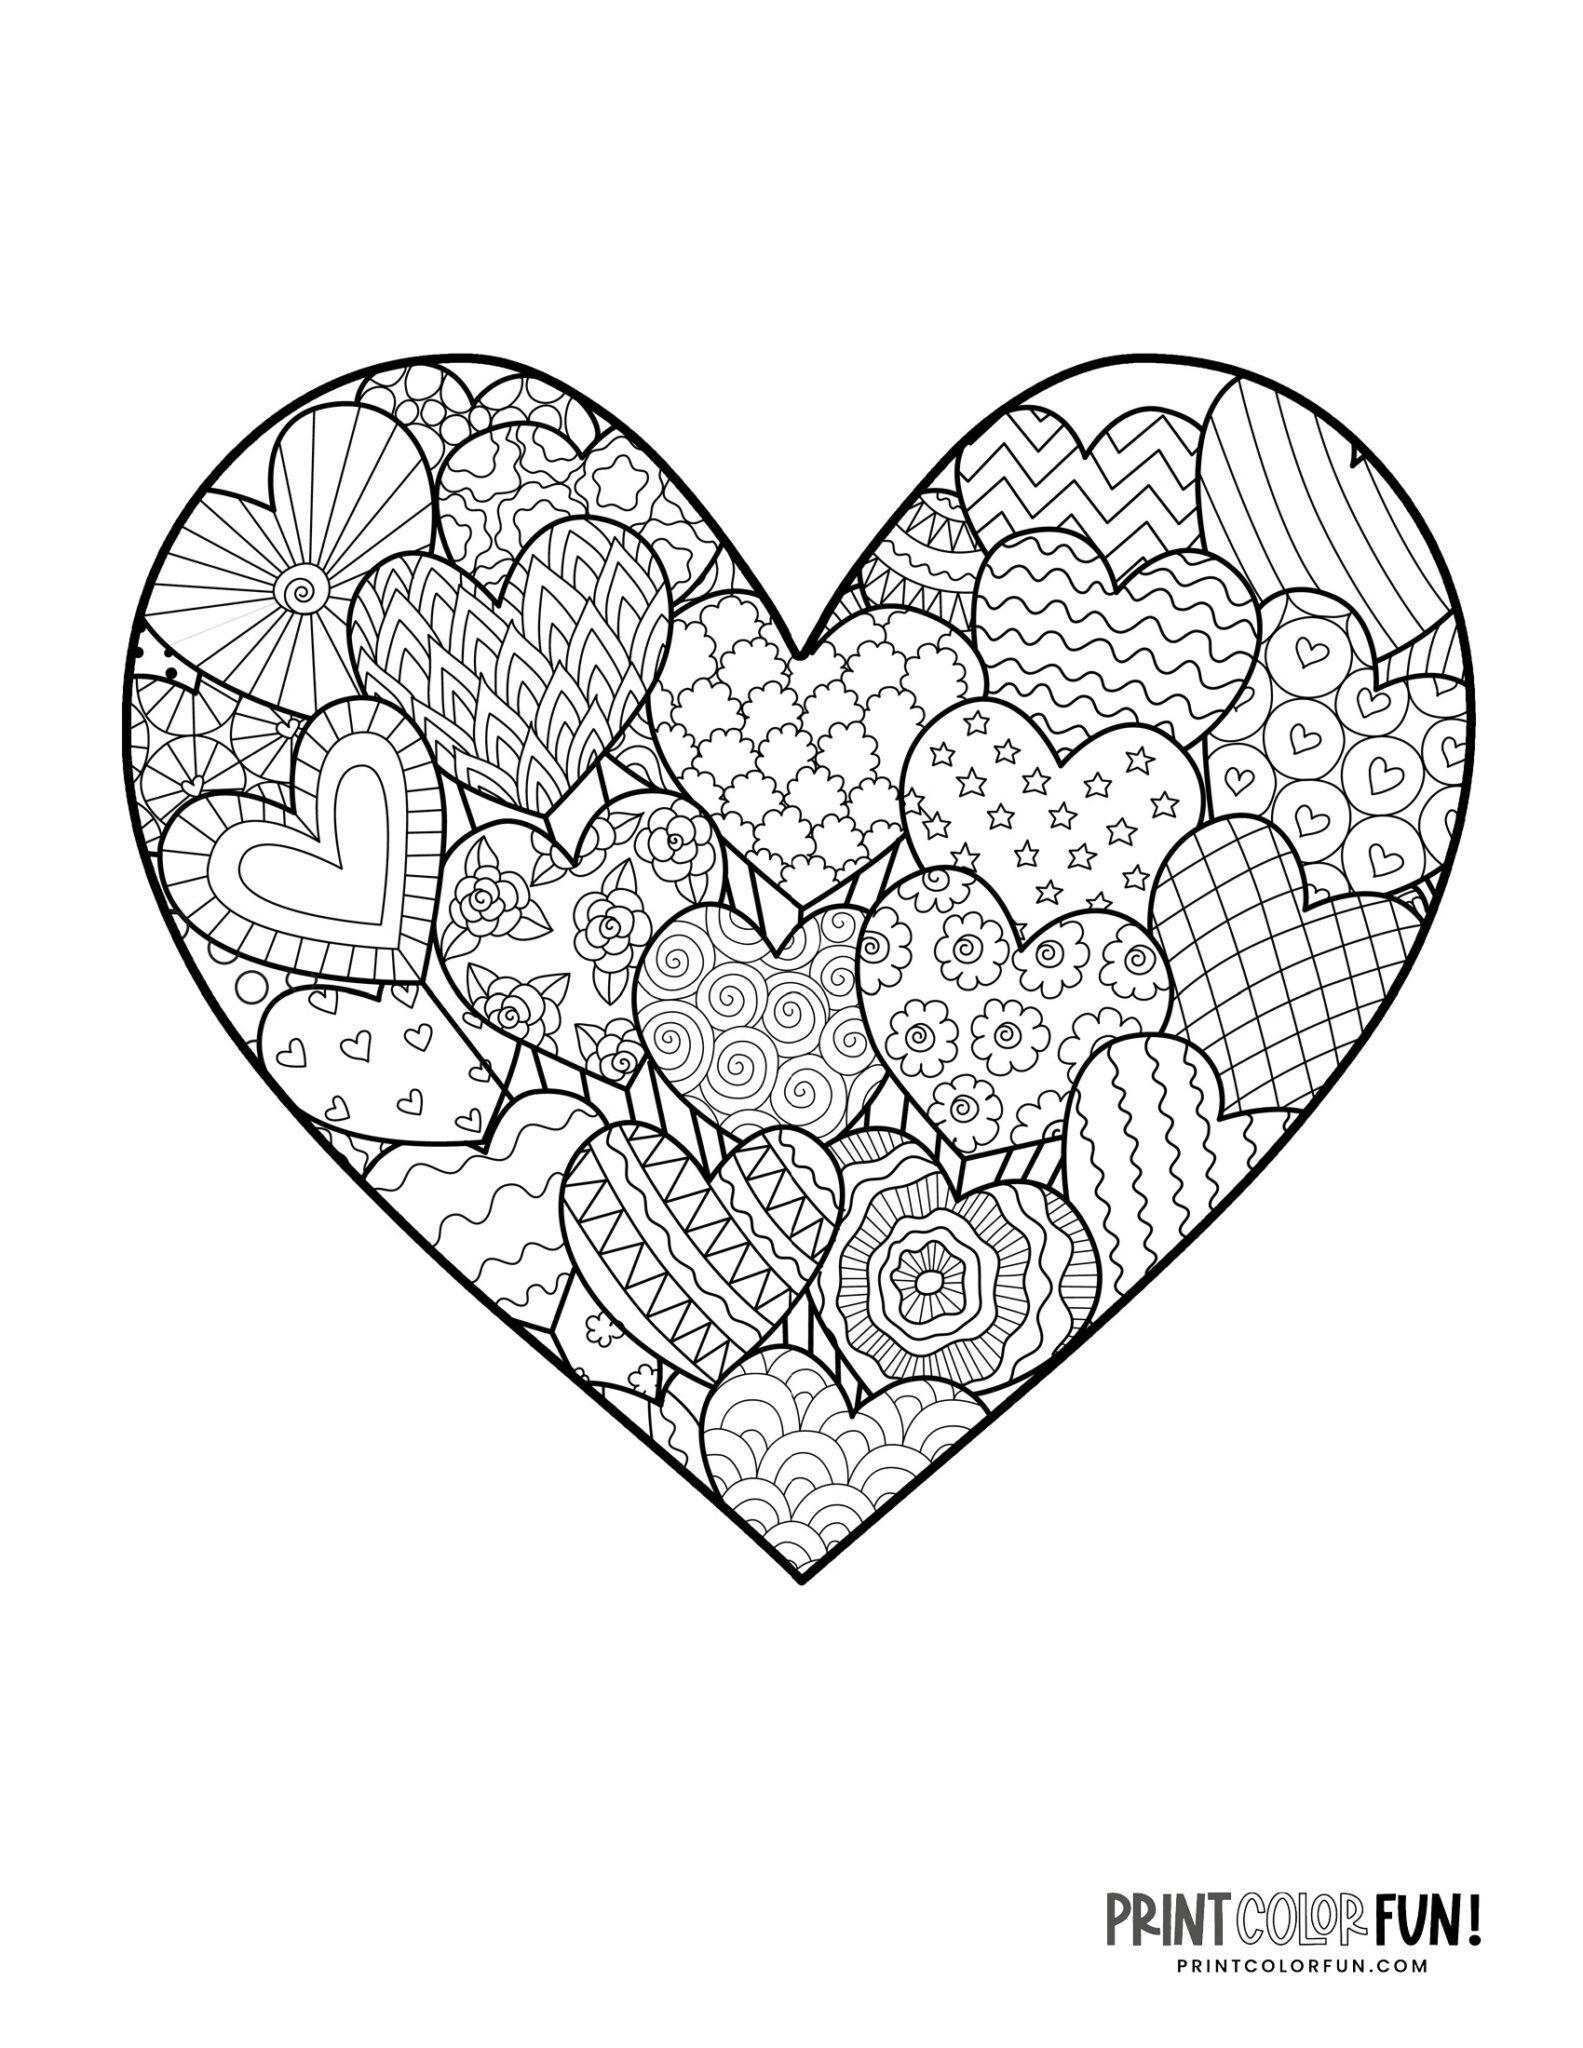 15 zen doodle heart coloring pages coloring page - Print. Color. Fun!